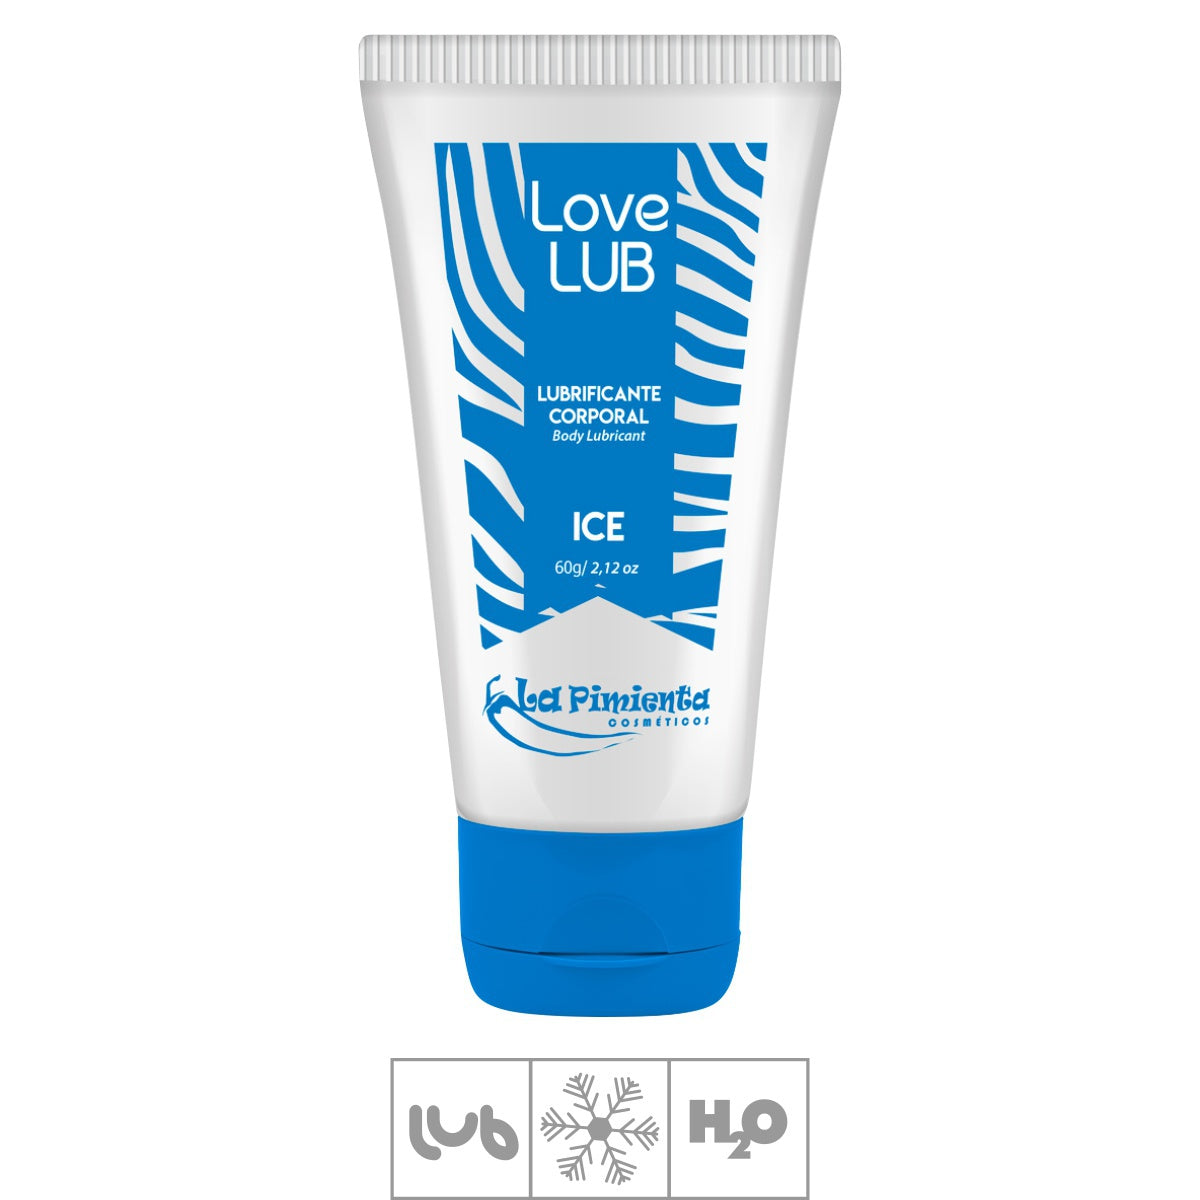 Love Lub - Ice Lubricant - 60g